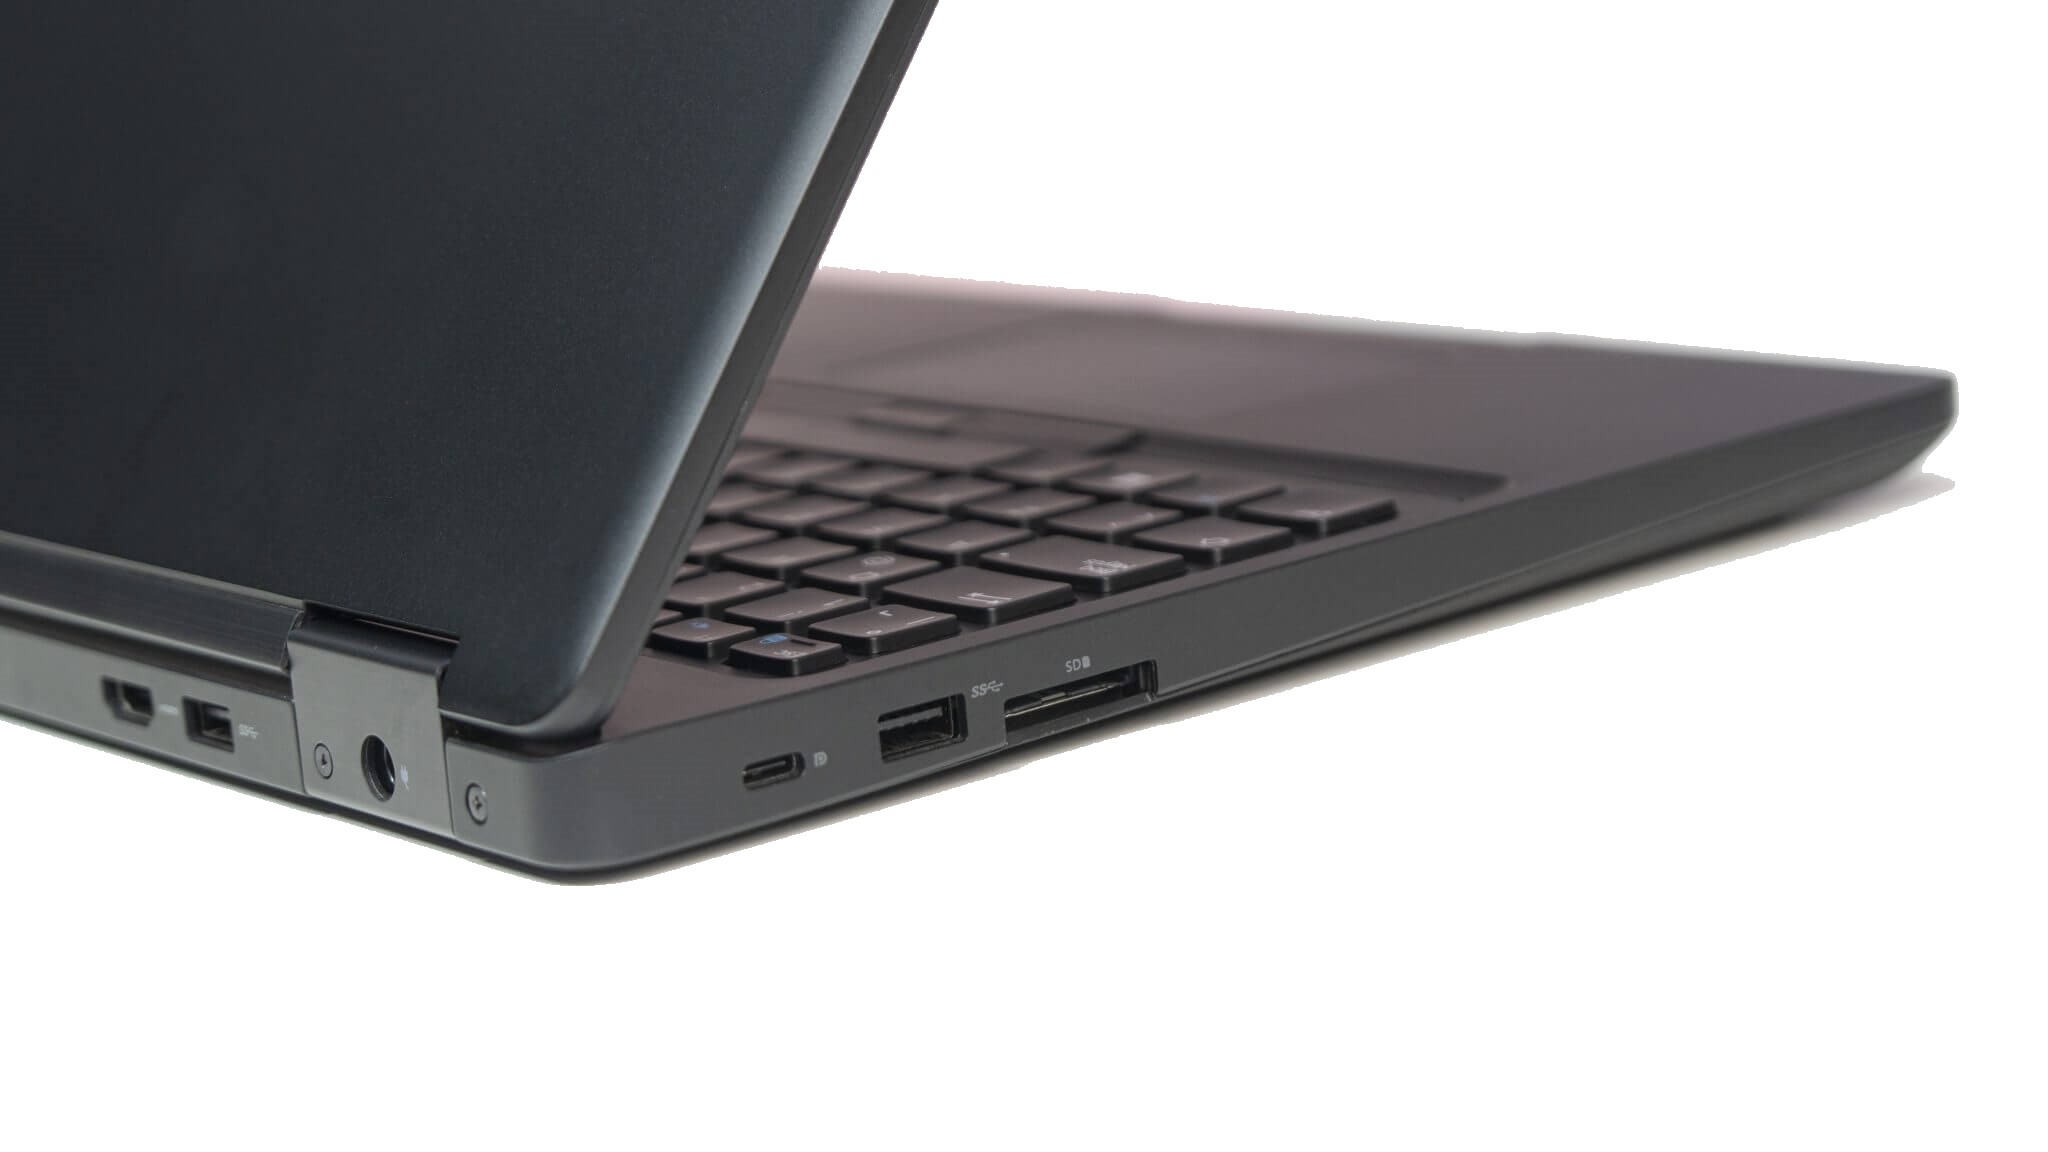 Laptop Dell Latitude 5590 Core i5-8350U, RAM 8GB, SSD 256GB, 15.6 Inch FHD